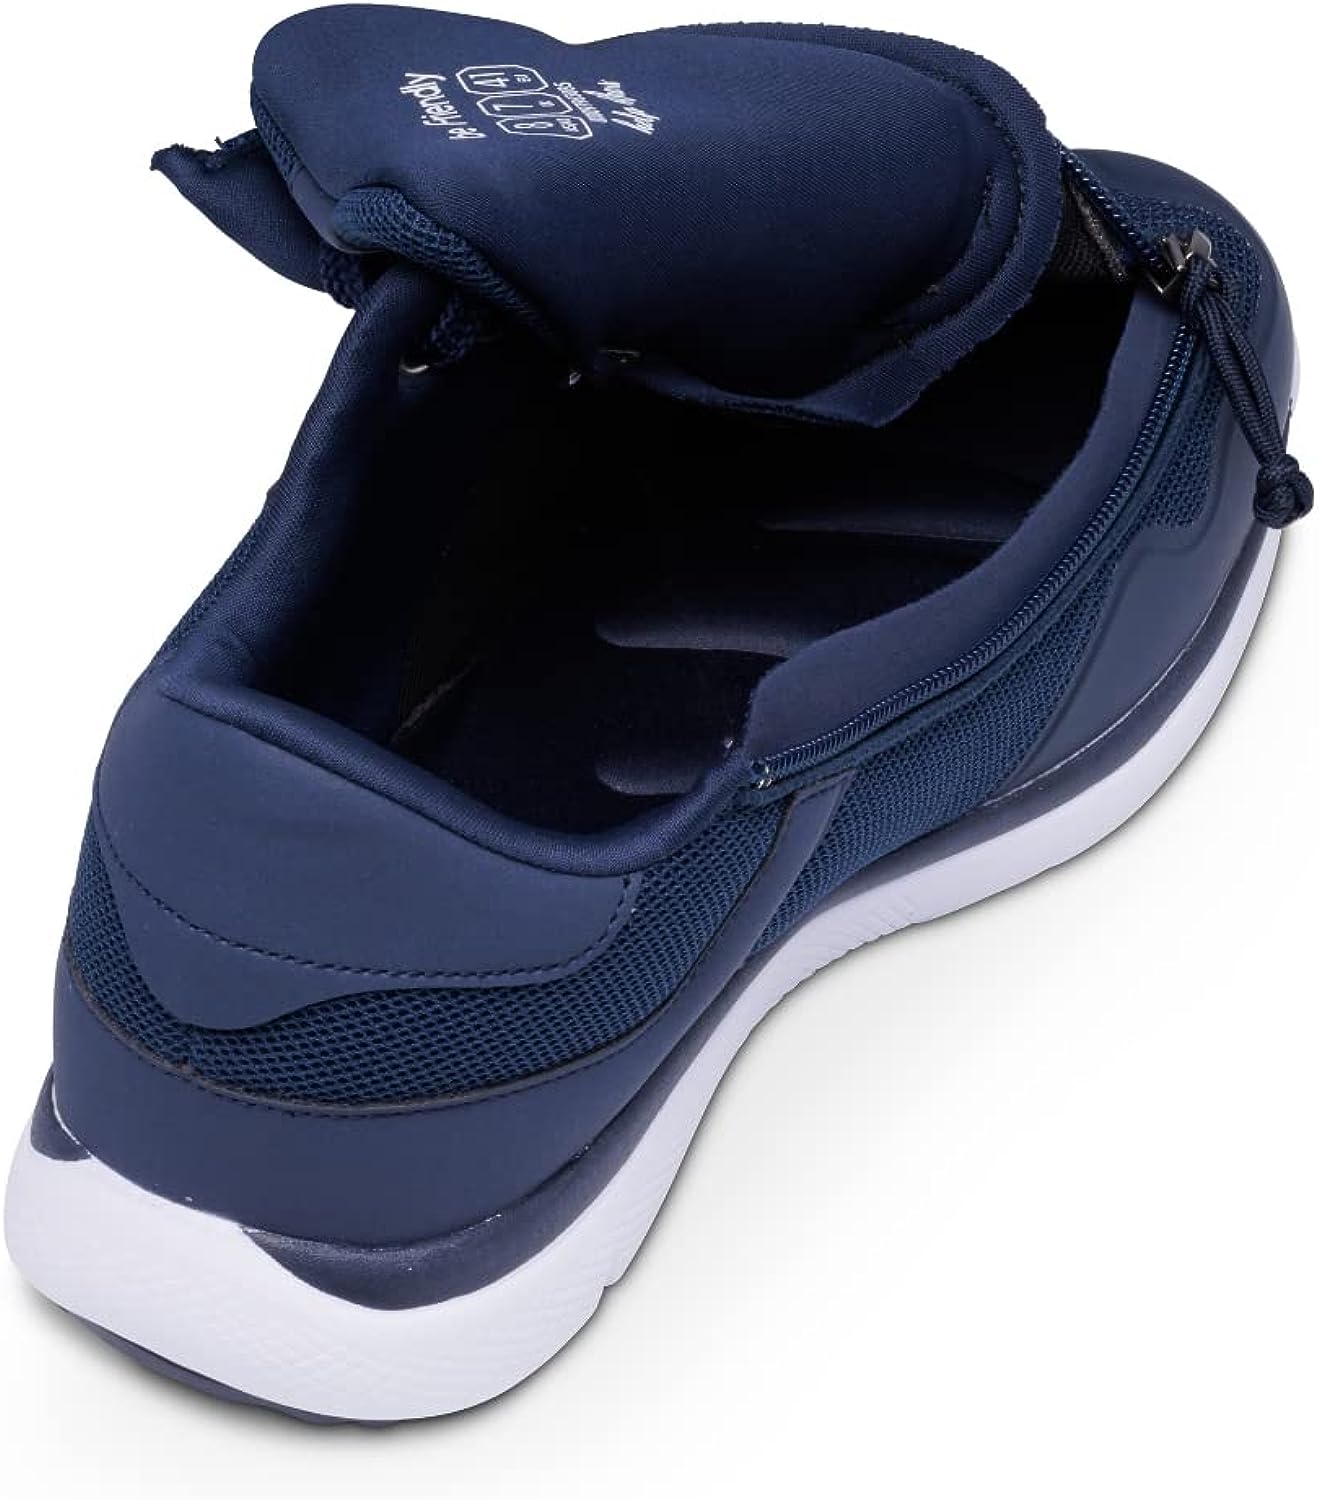 Friendly Shoes Voyage Unisex Shoe - Best AFO/SMO [...]